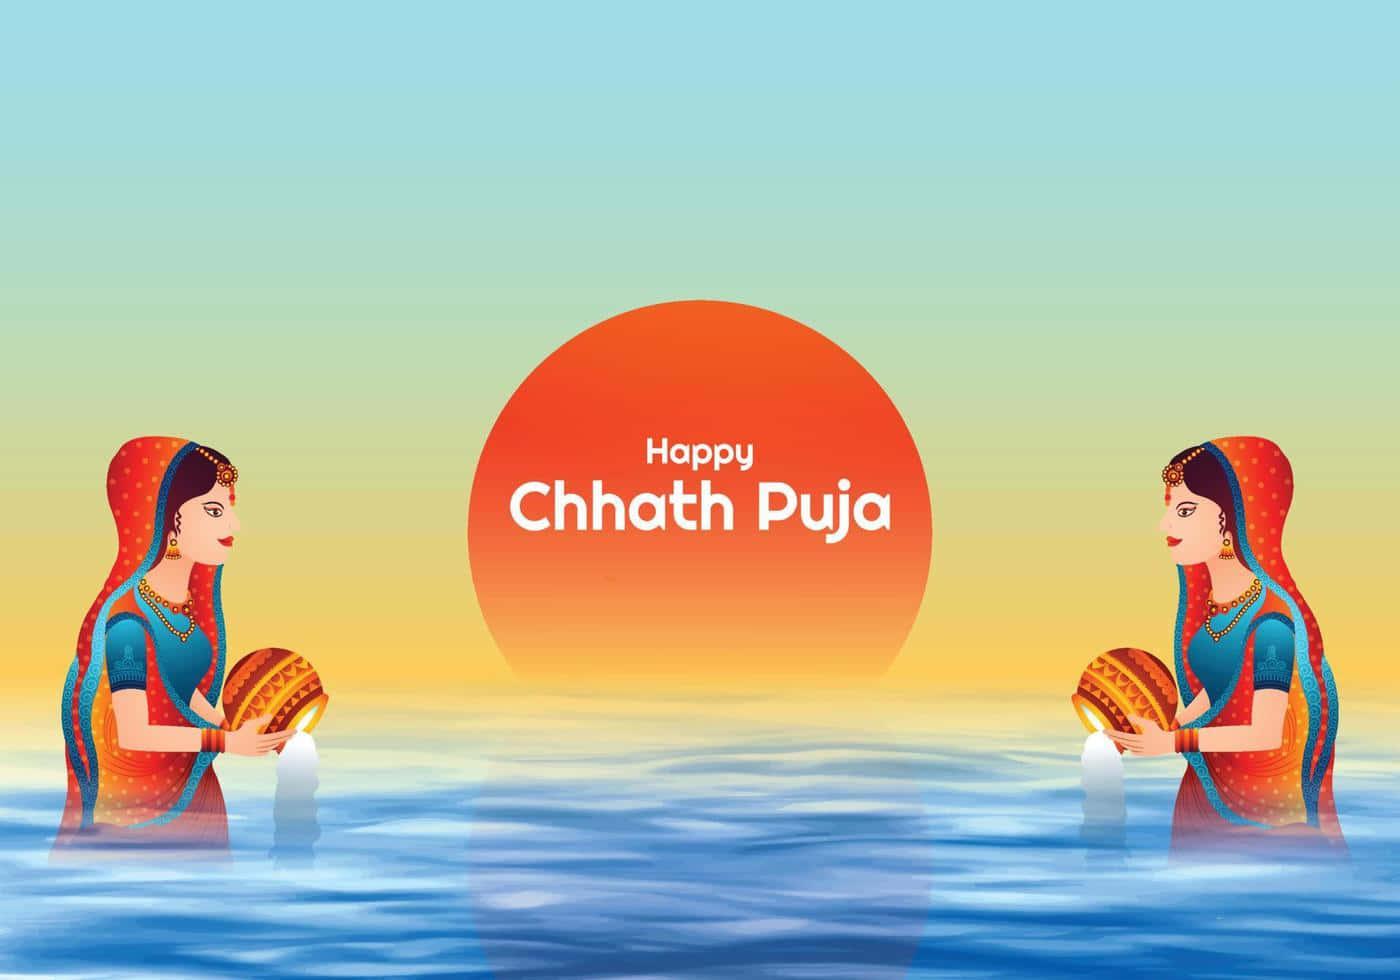 Celebrate Chhath Puja with Festive Joy.